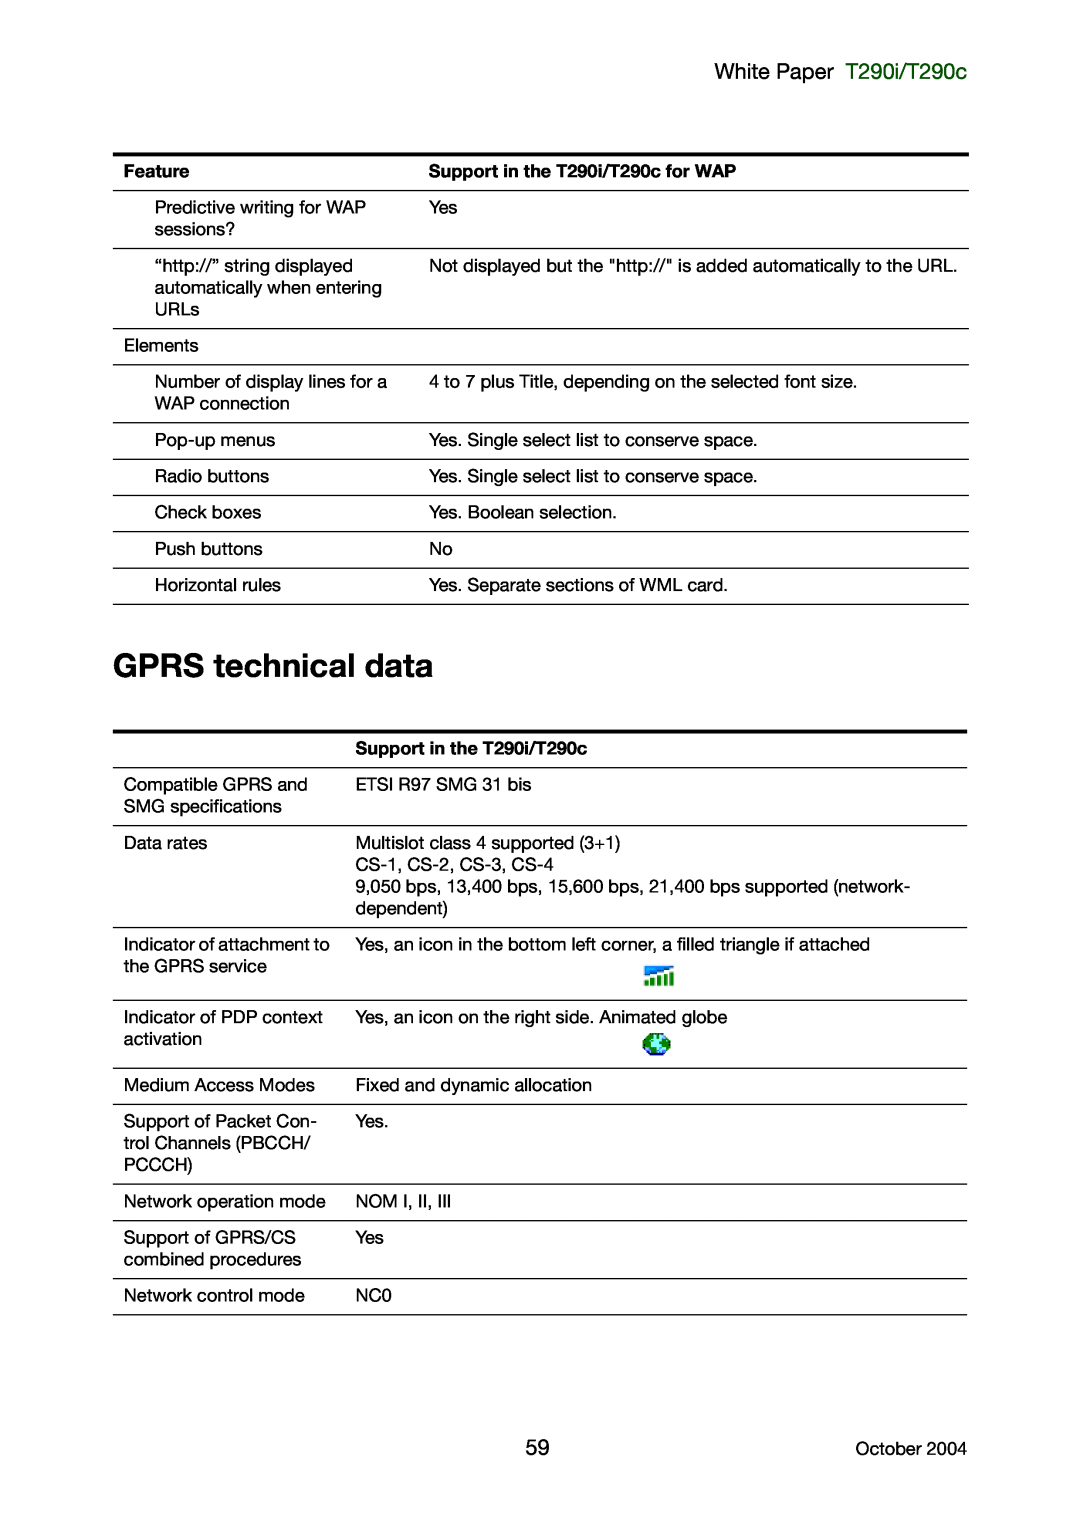 Sony Ericsson manual GPRS technical data, White Paper T290i/T290c 